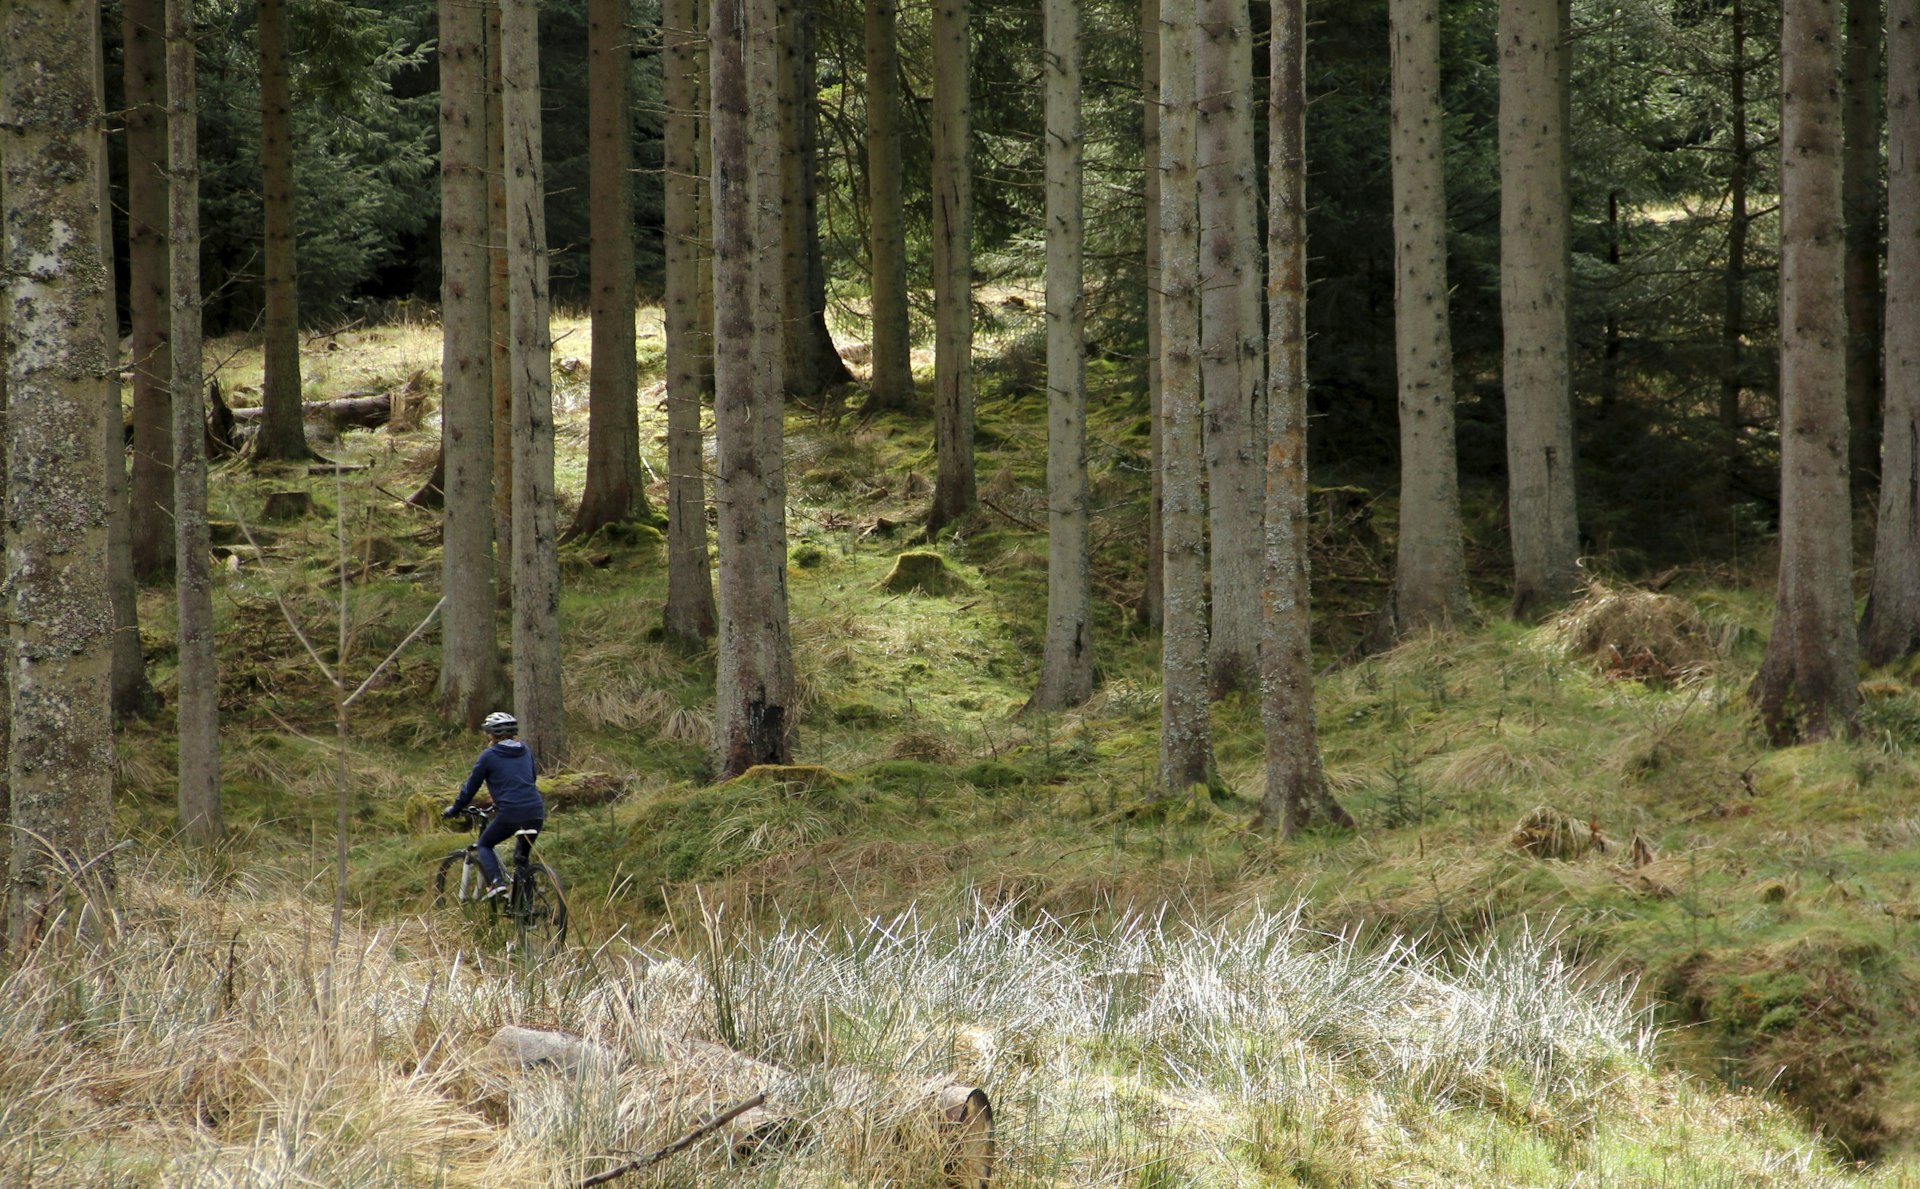 A solo cyclist rides through dense forest